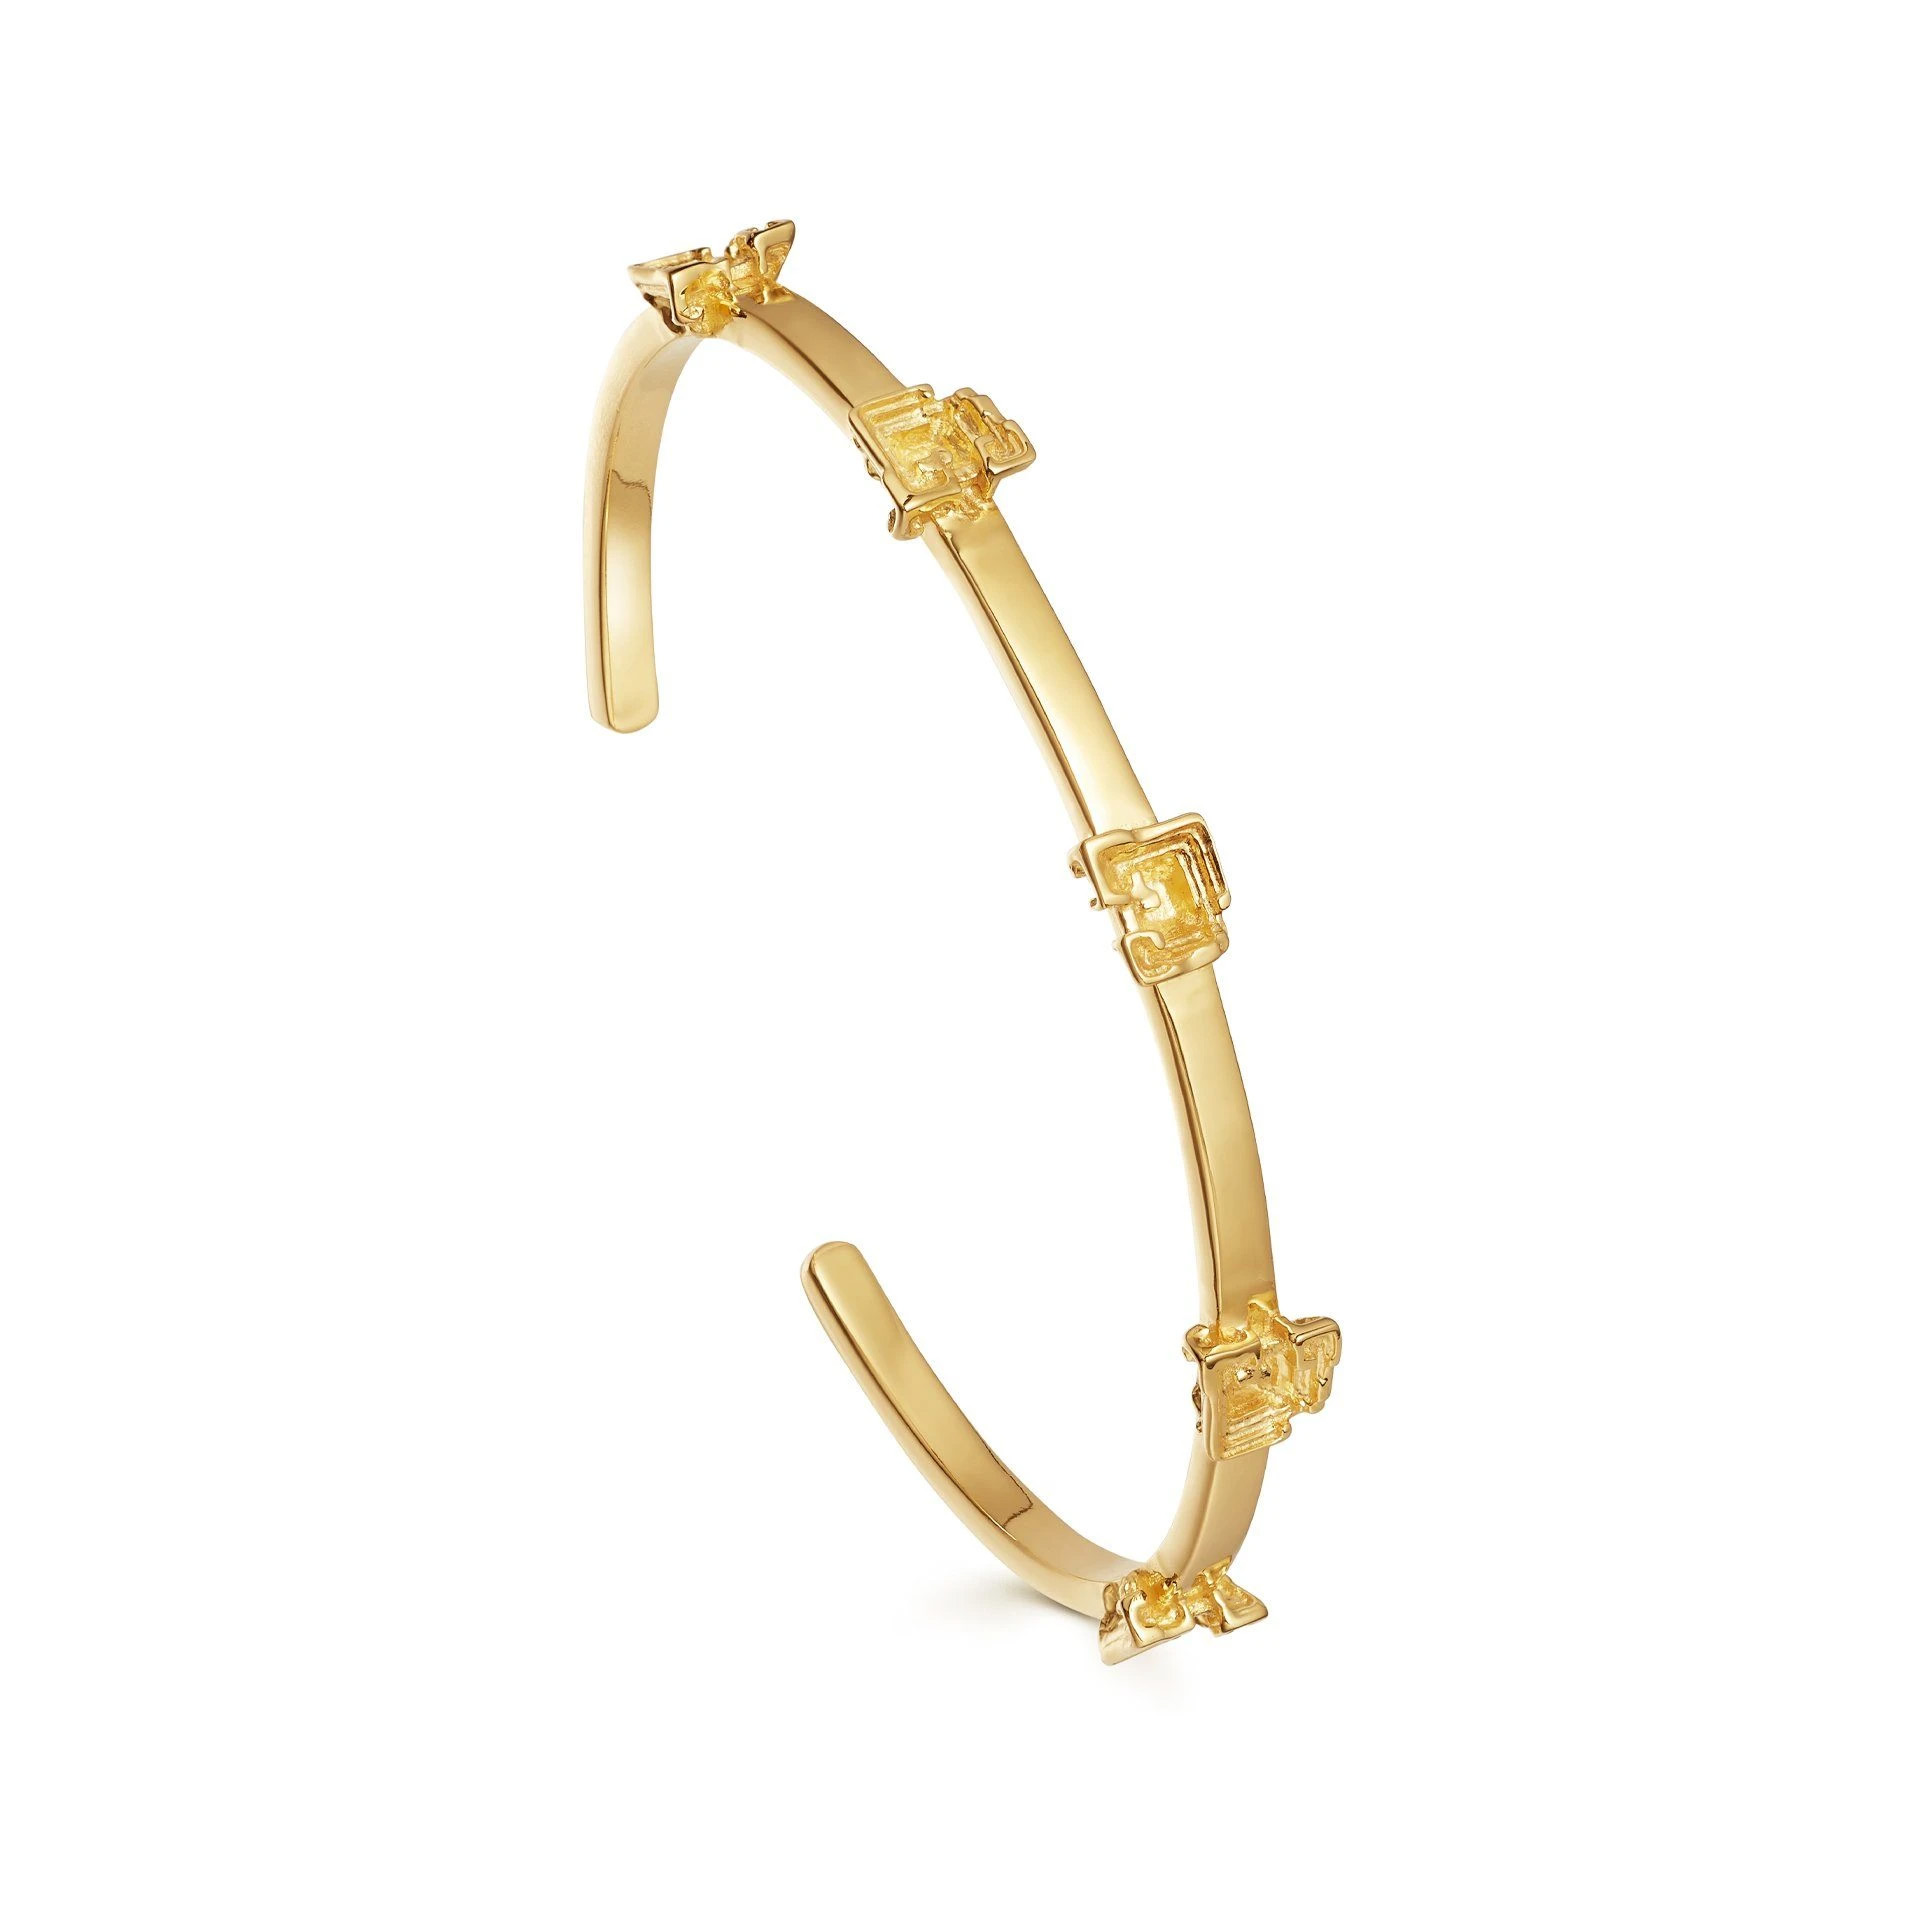 Wholesale OEM 18ct OEM/ODM Jewelry Gold Plated Cuff Bracelet on Brass custom design